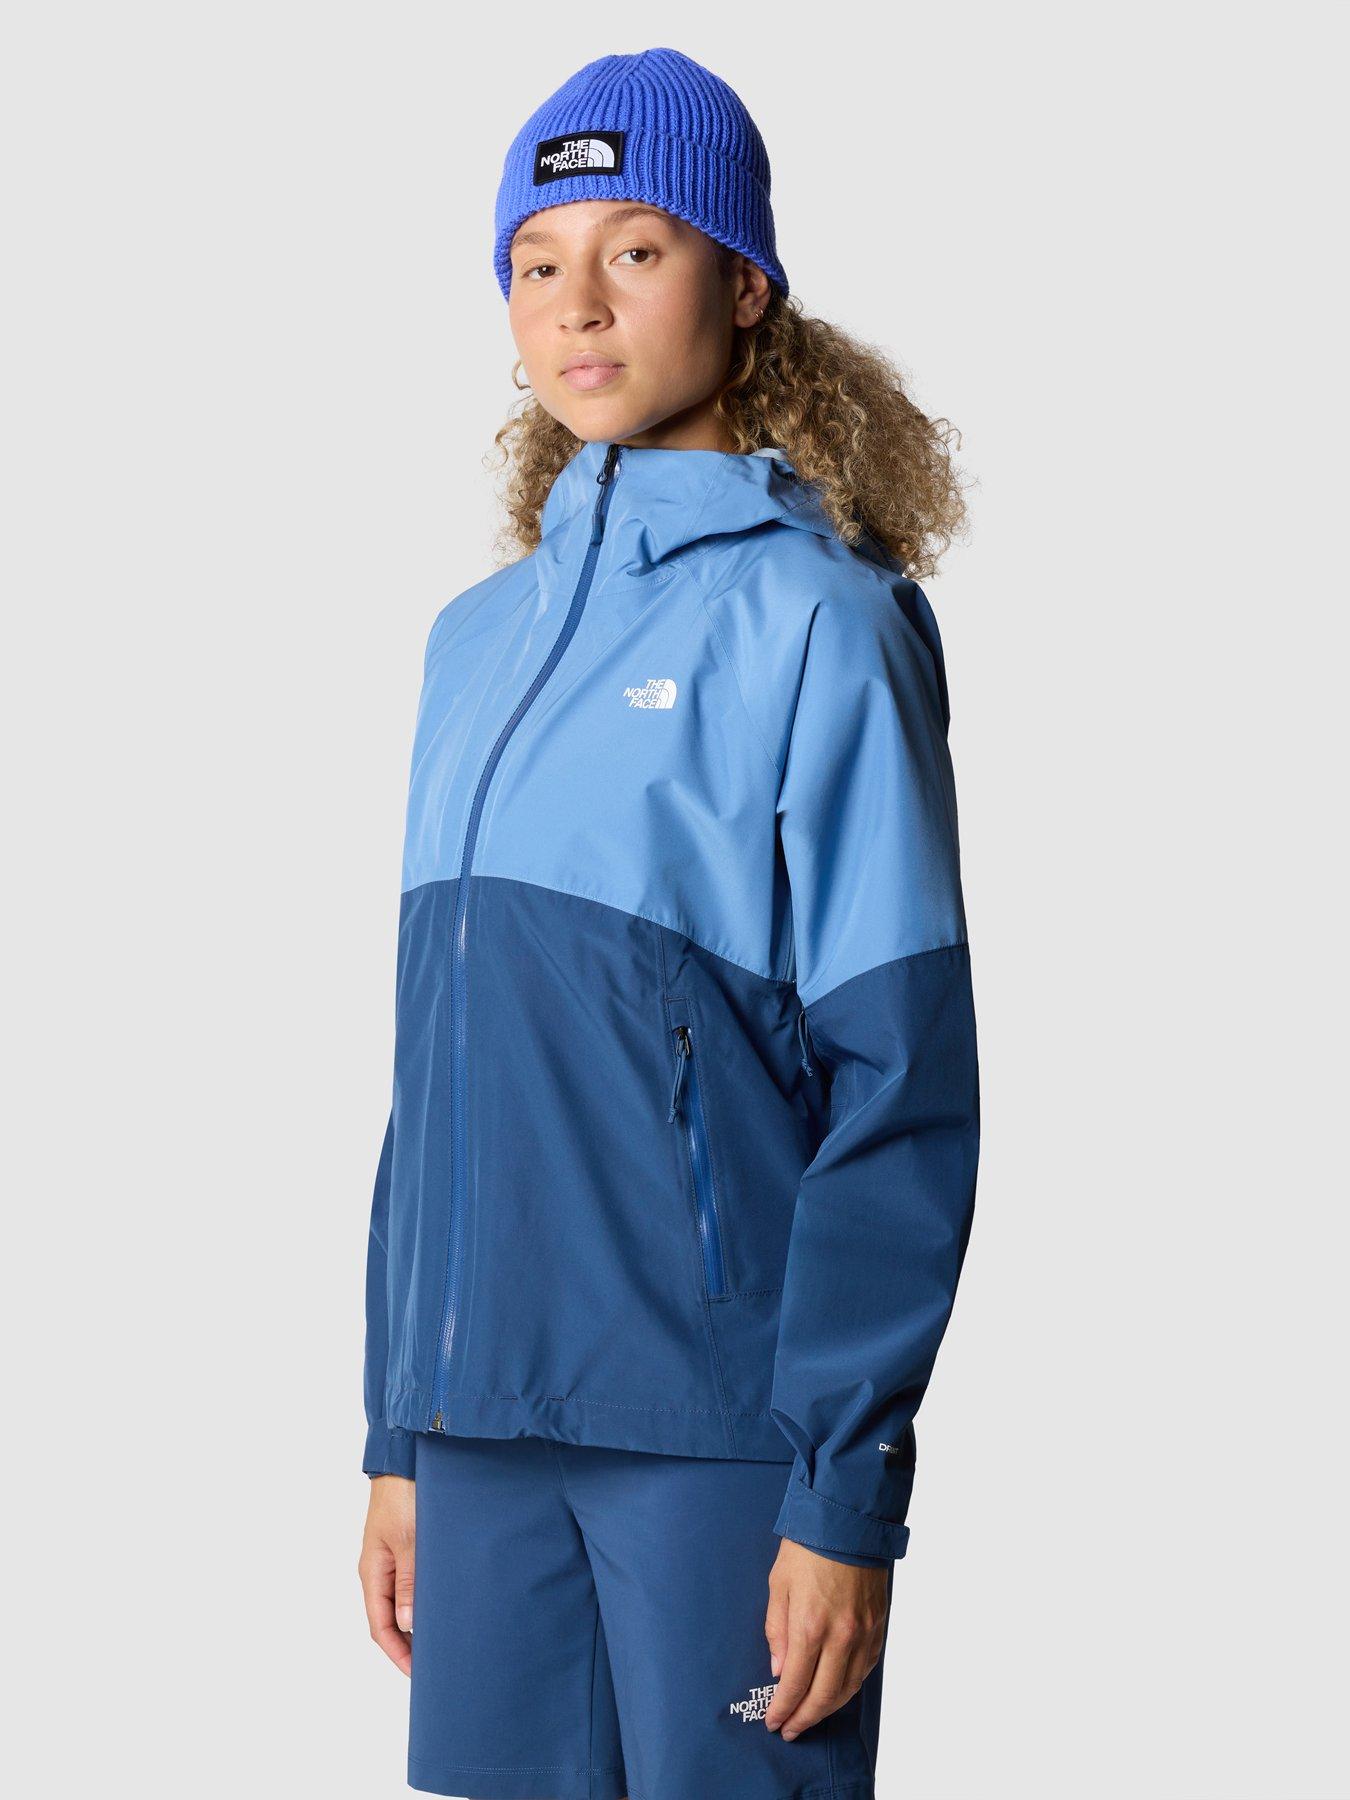 North Face Rain jacket hooded Small blue detachable hood sleeve pockets